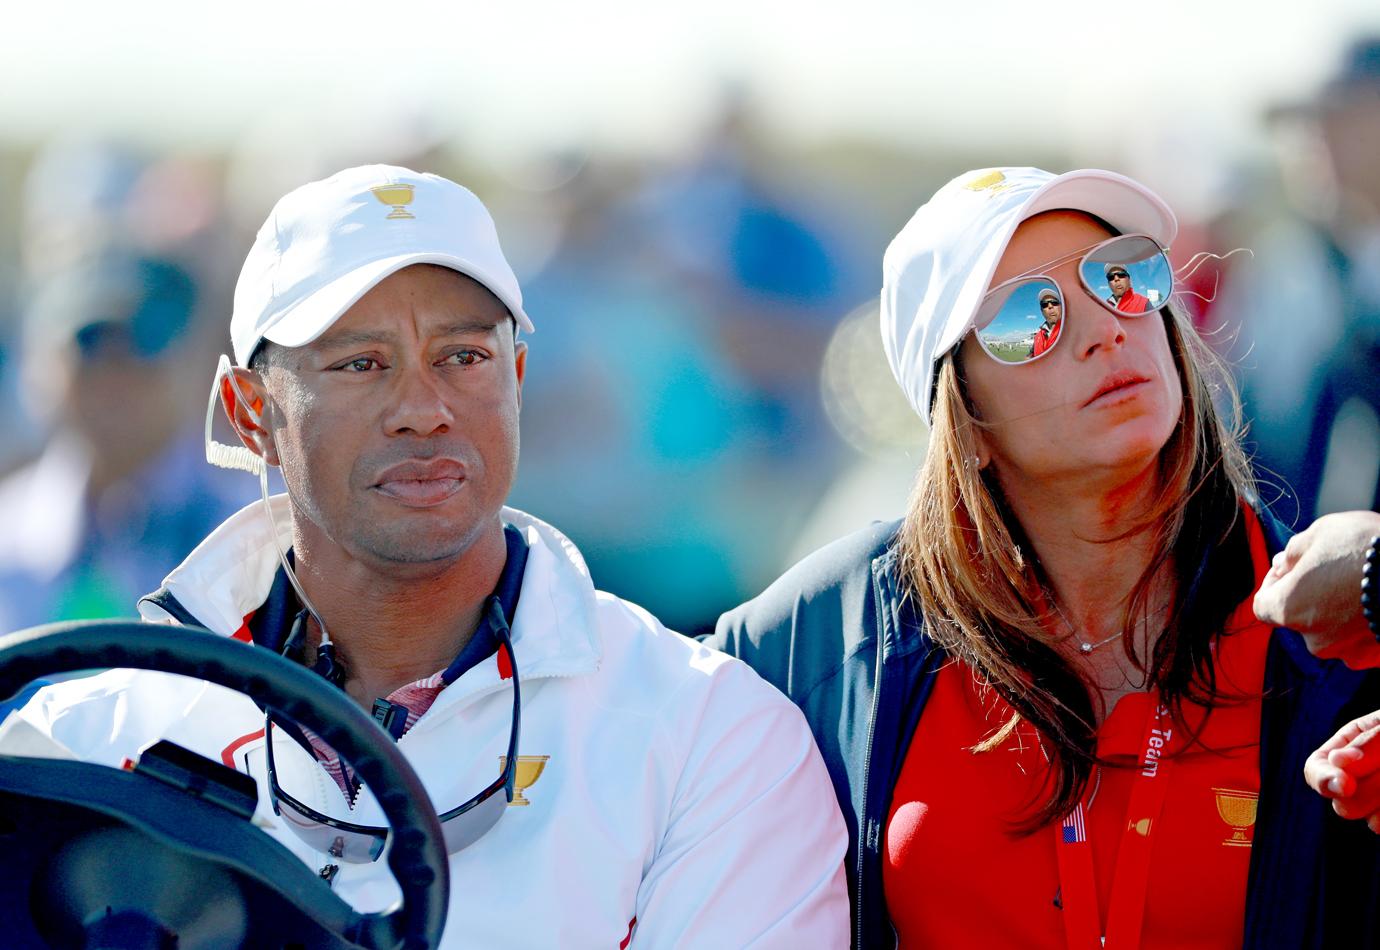 Tiger Woods New Girlfriend Dark Past Exposed! image